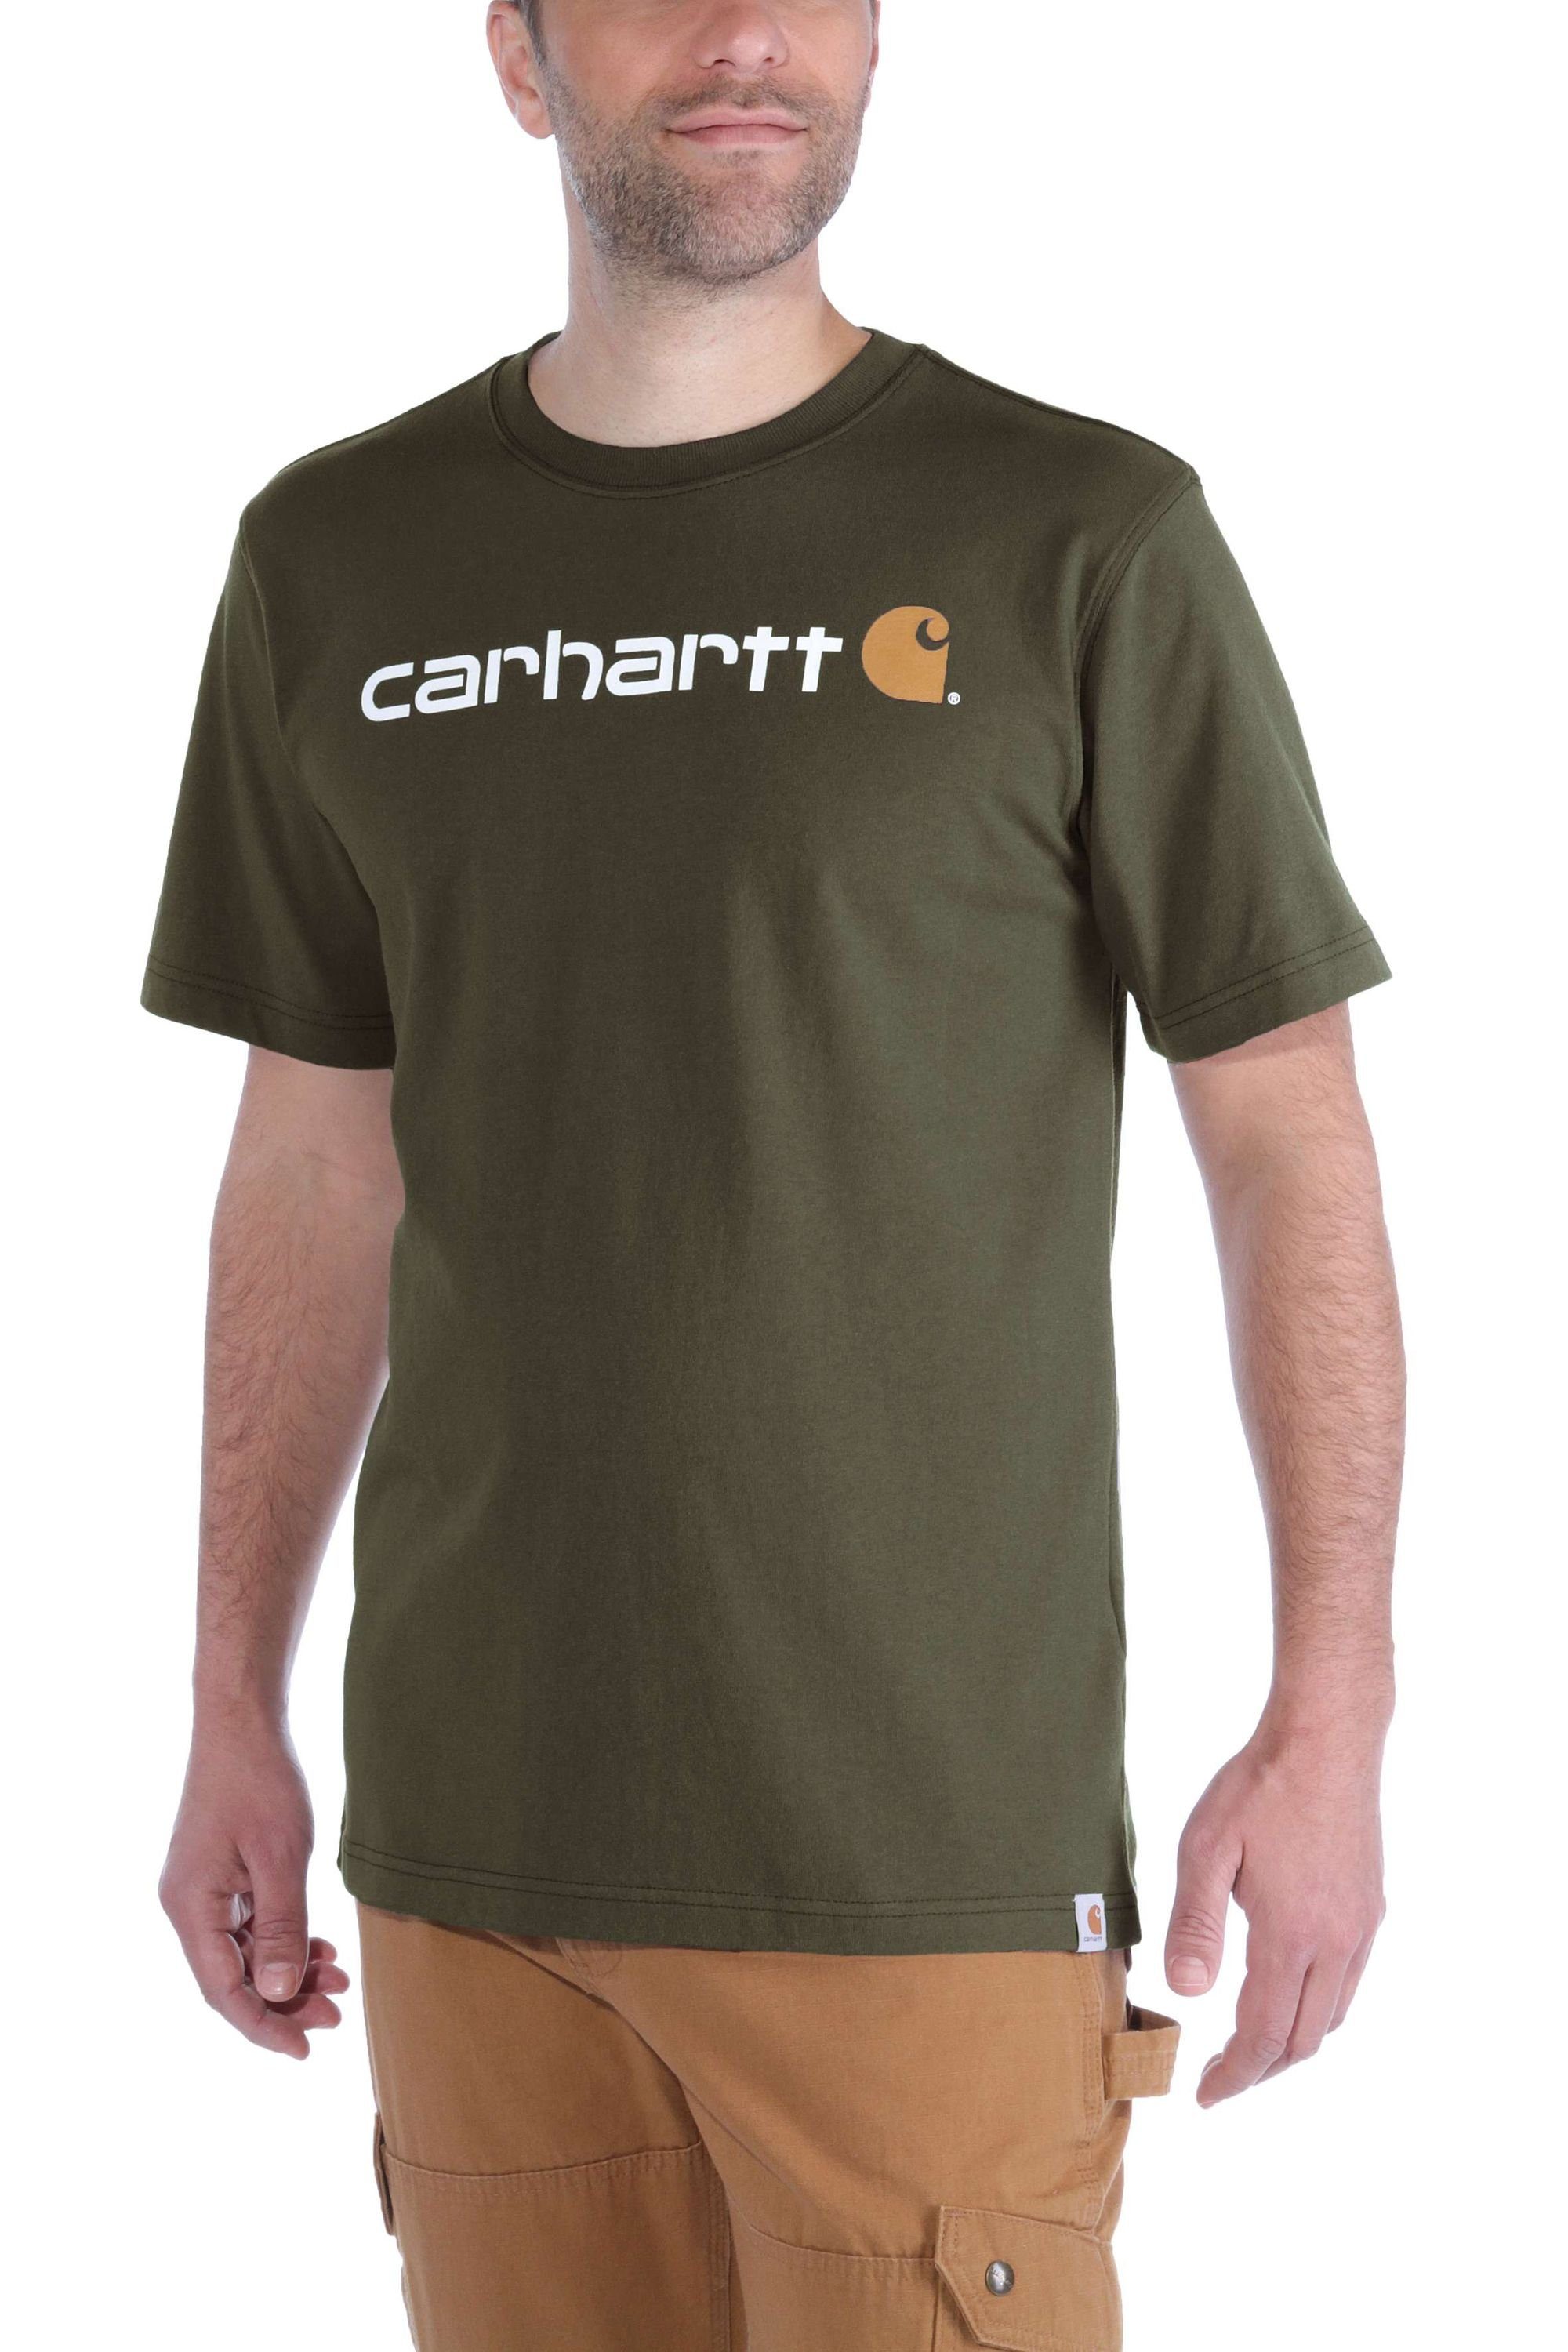 LOGO Carhartt Logo Carhartt T-Shirt auf malachite 103361 T-SHIRT Brust S/S (1-tlg) CORE der